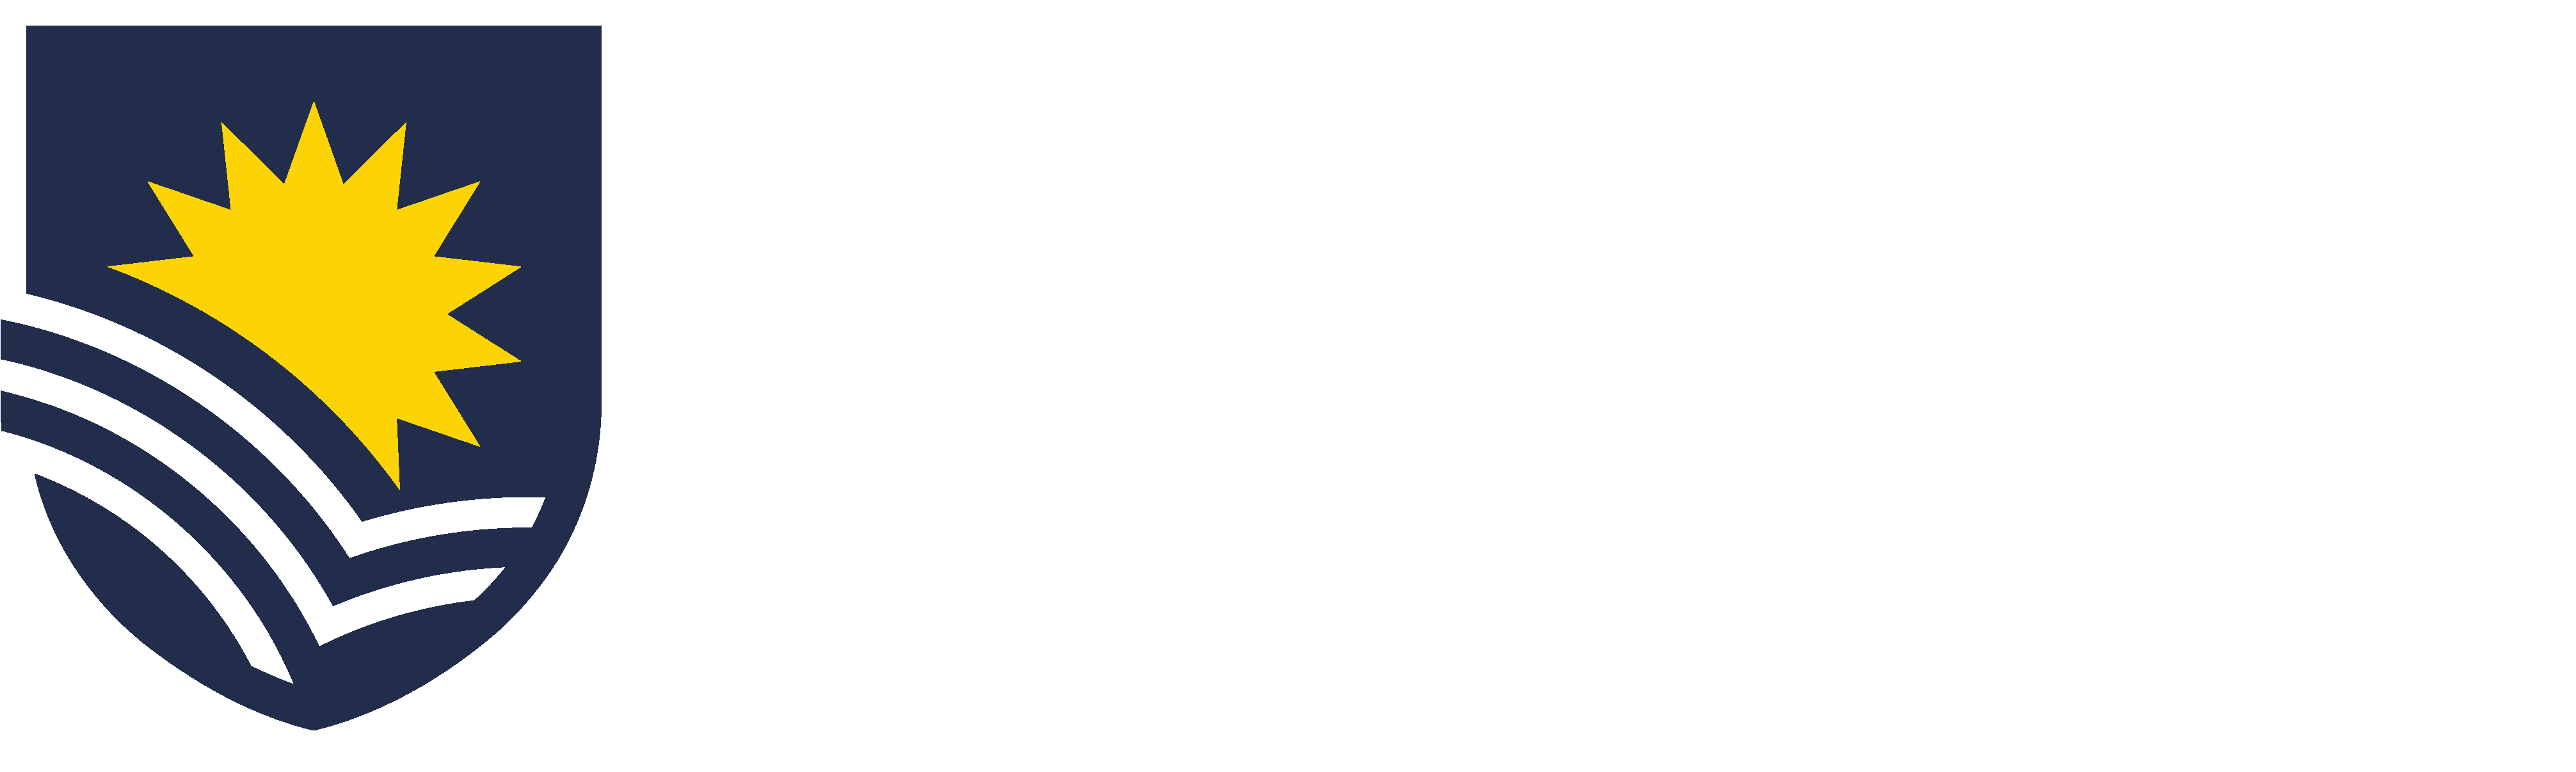 01 Flinders University logo